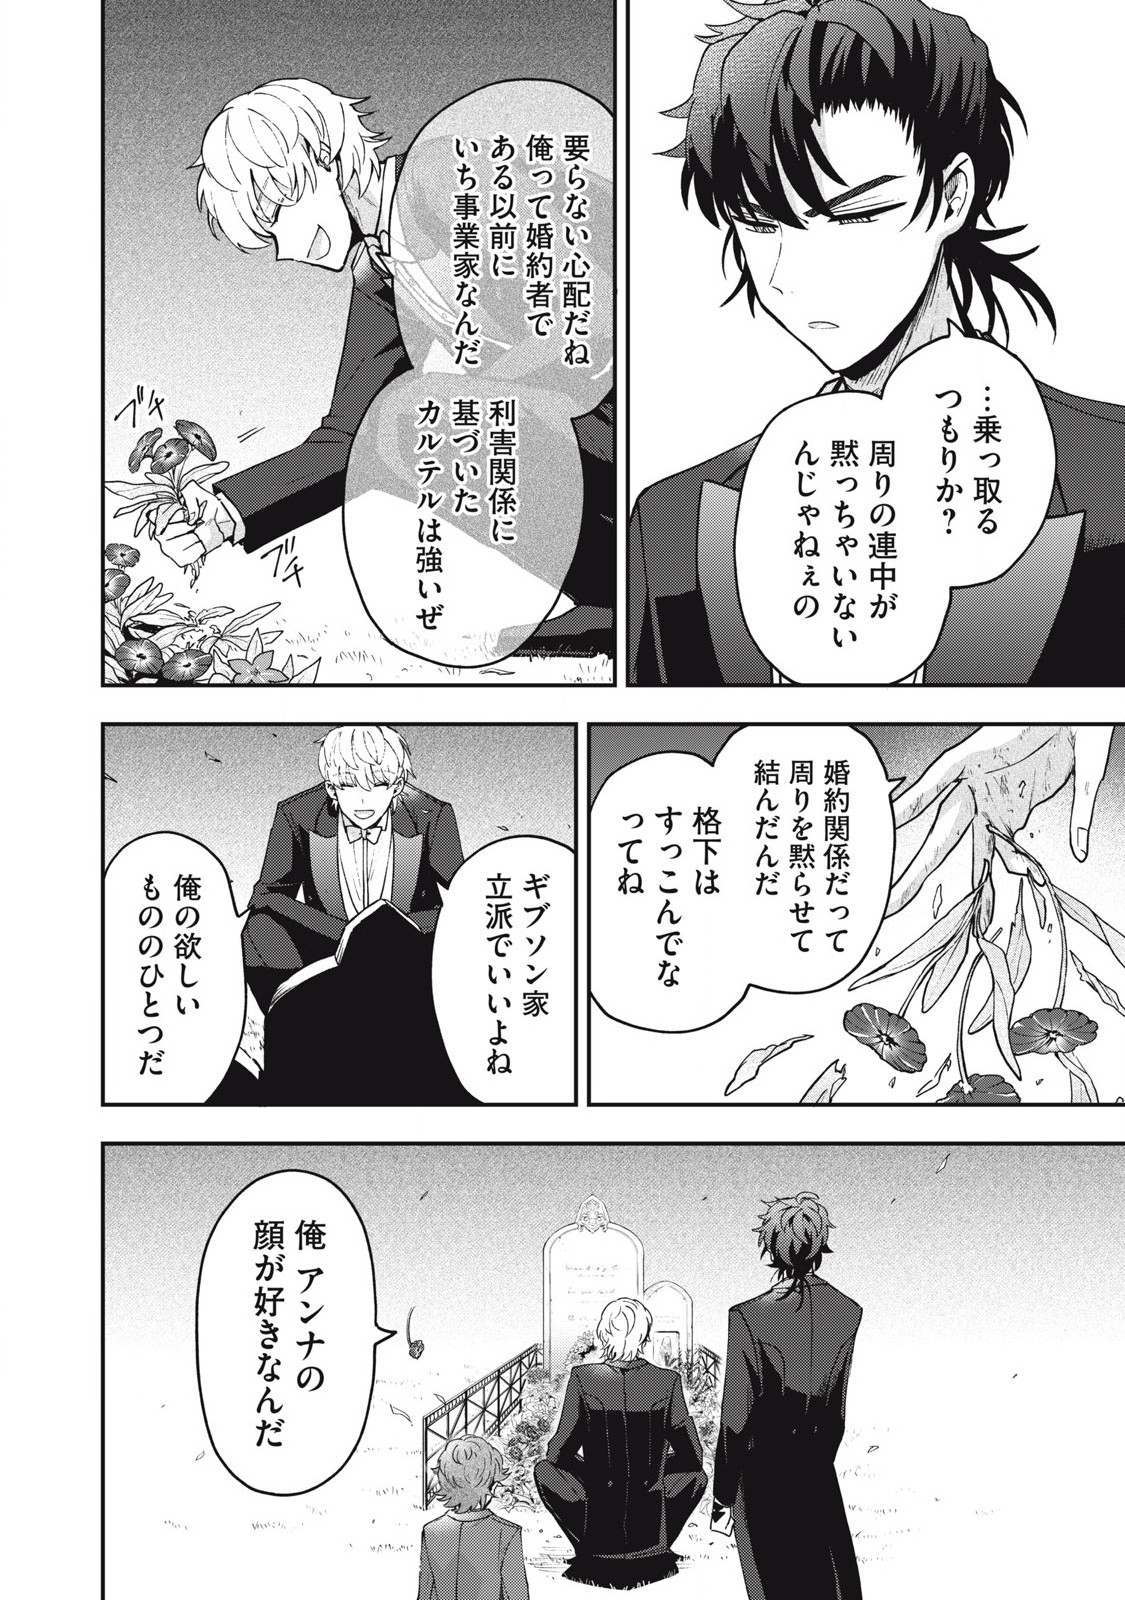 Yuki to Sumi - Chapter 19.2 - Page 2